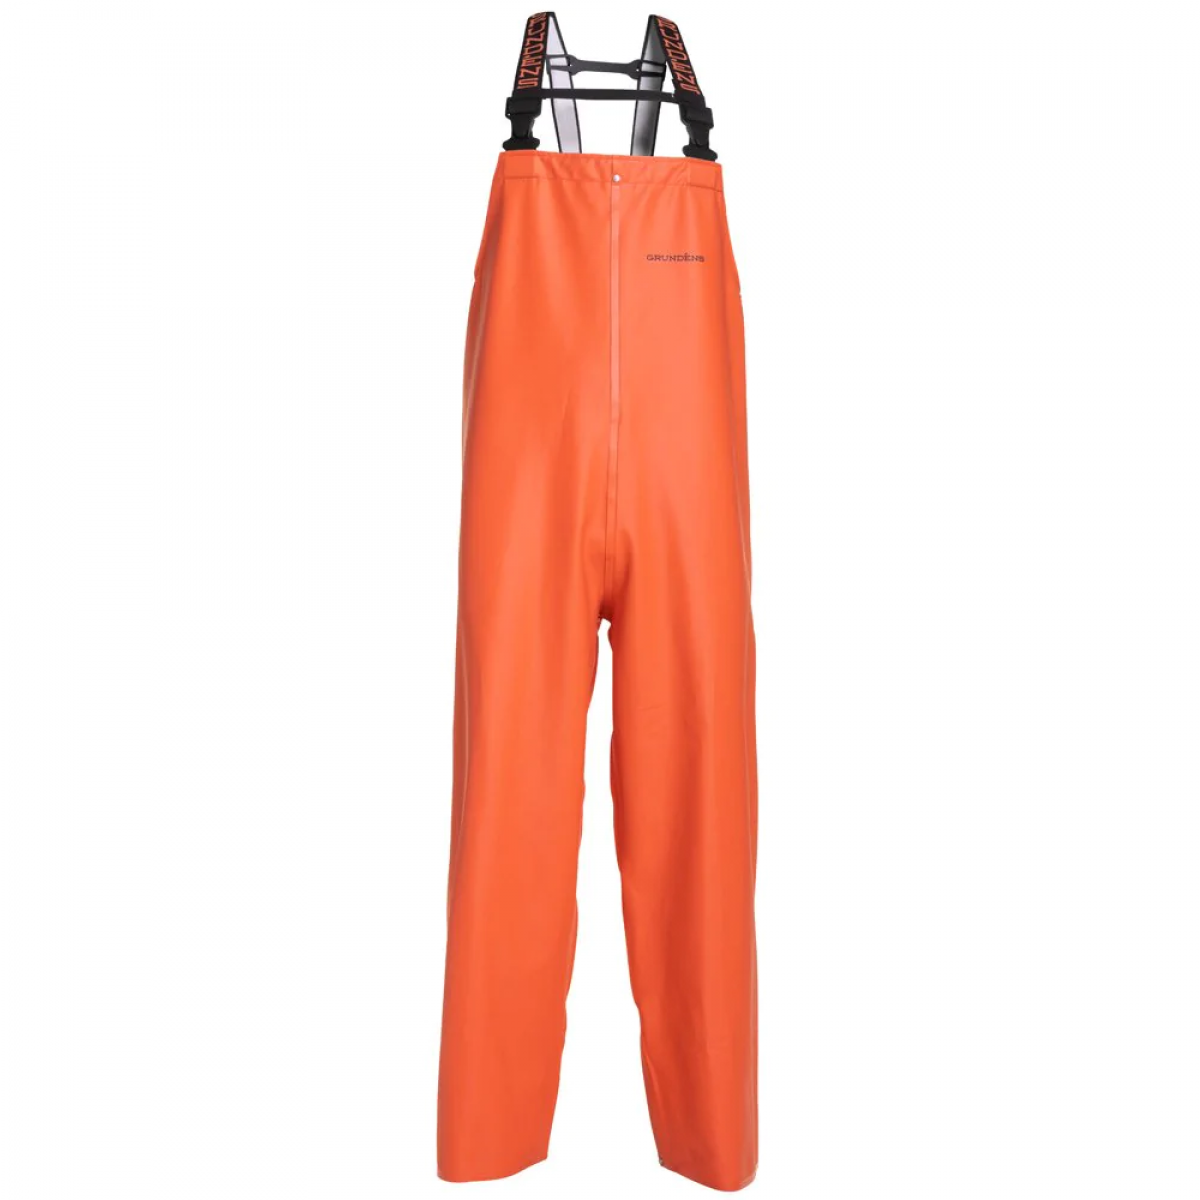 Grundens Clipper 116 Bib Commercial Fishing Bib Pants Orange Size L - 10028